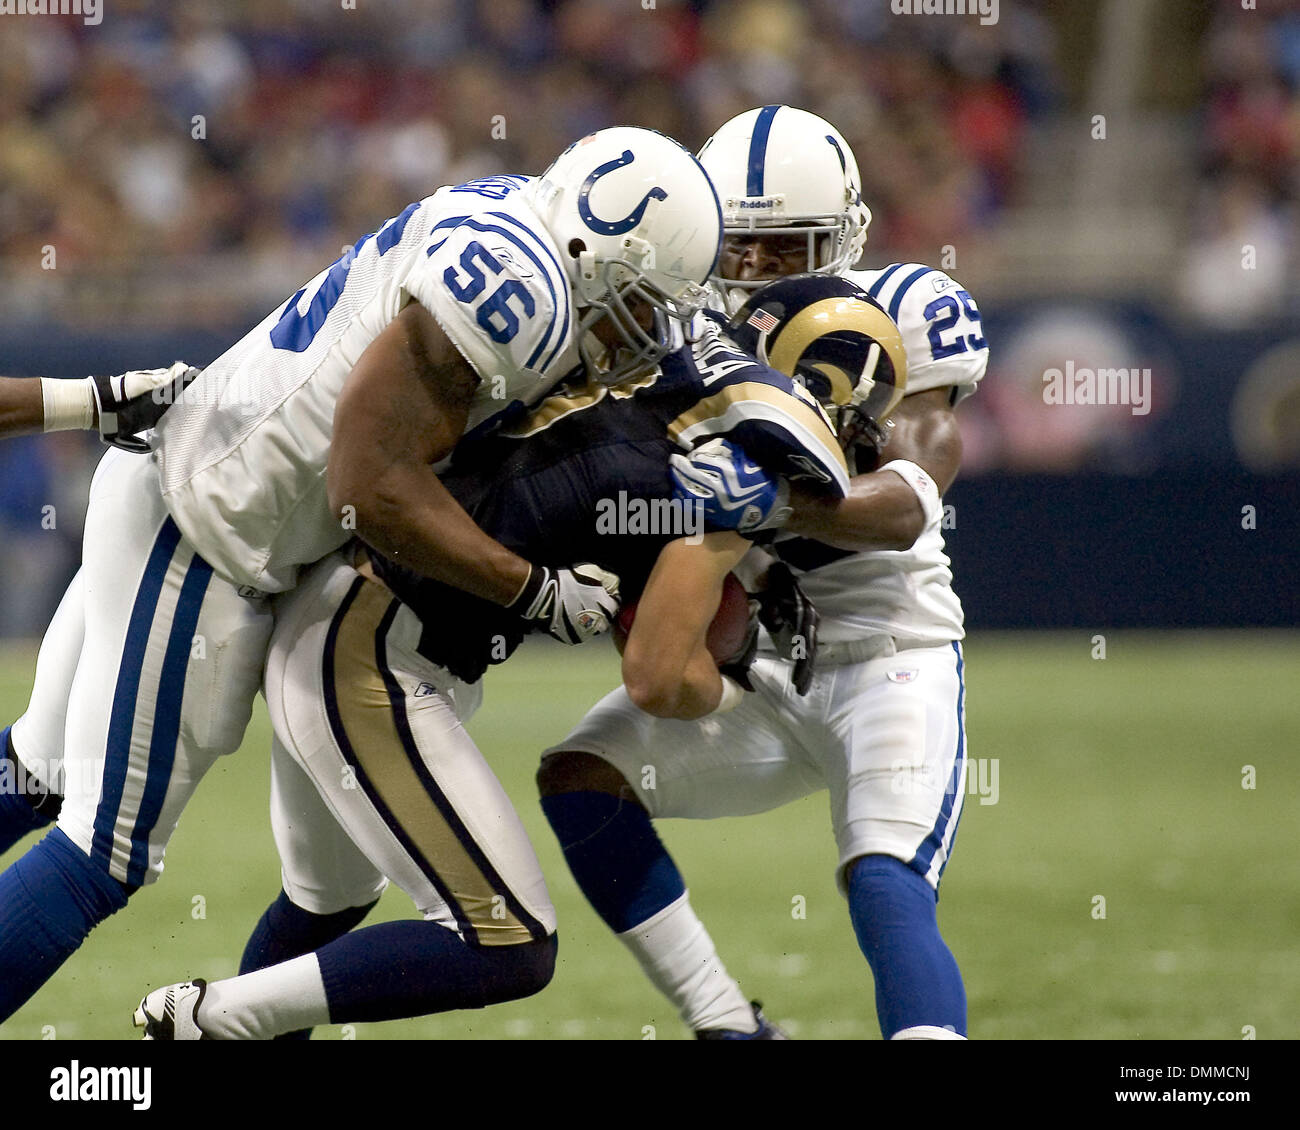 Oct 25, 2009 - St Louis, Missouri, USA - NFL Football - Rams receiver ...